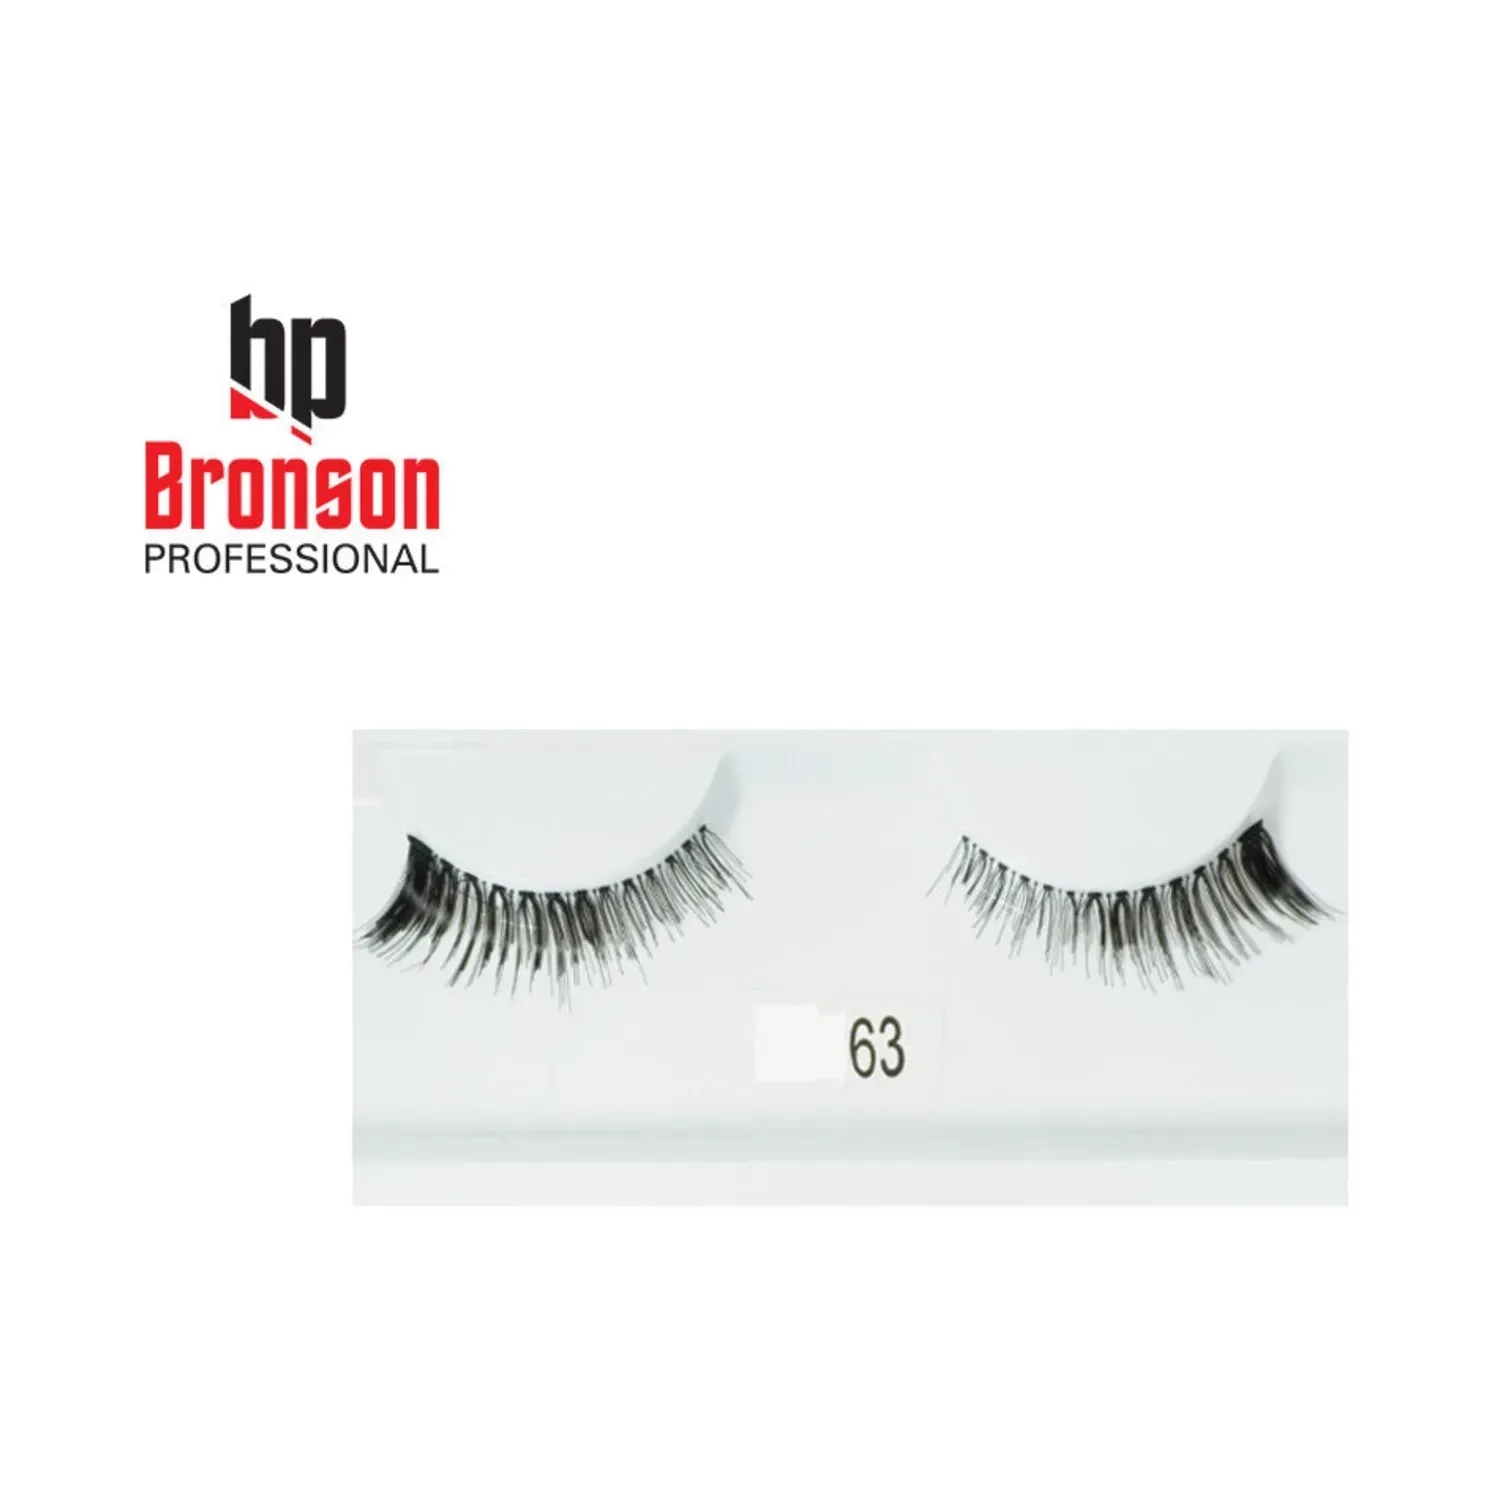 Bronson Professional Eyelashes - 63 Black (1 Pair)